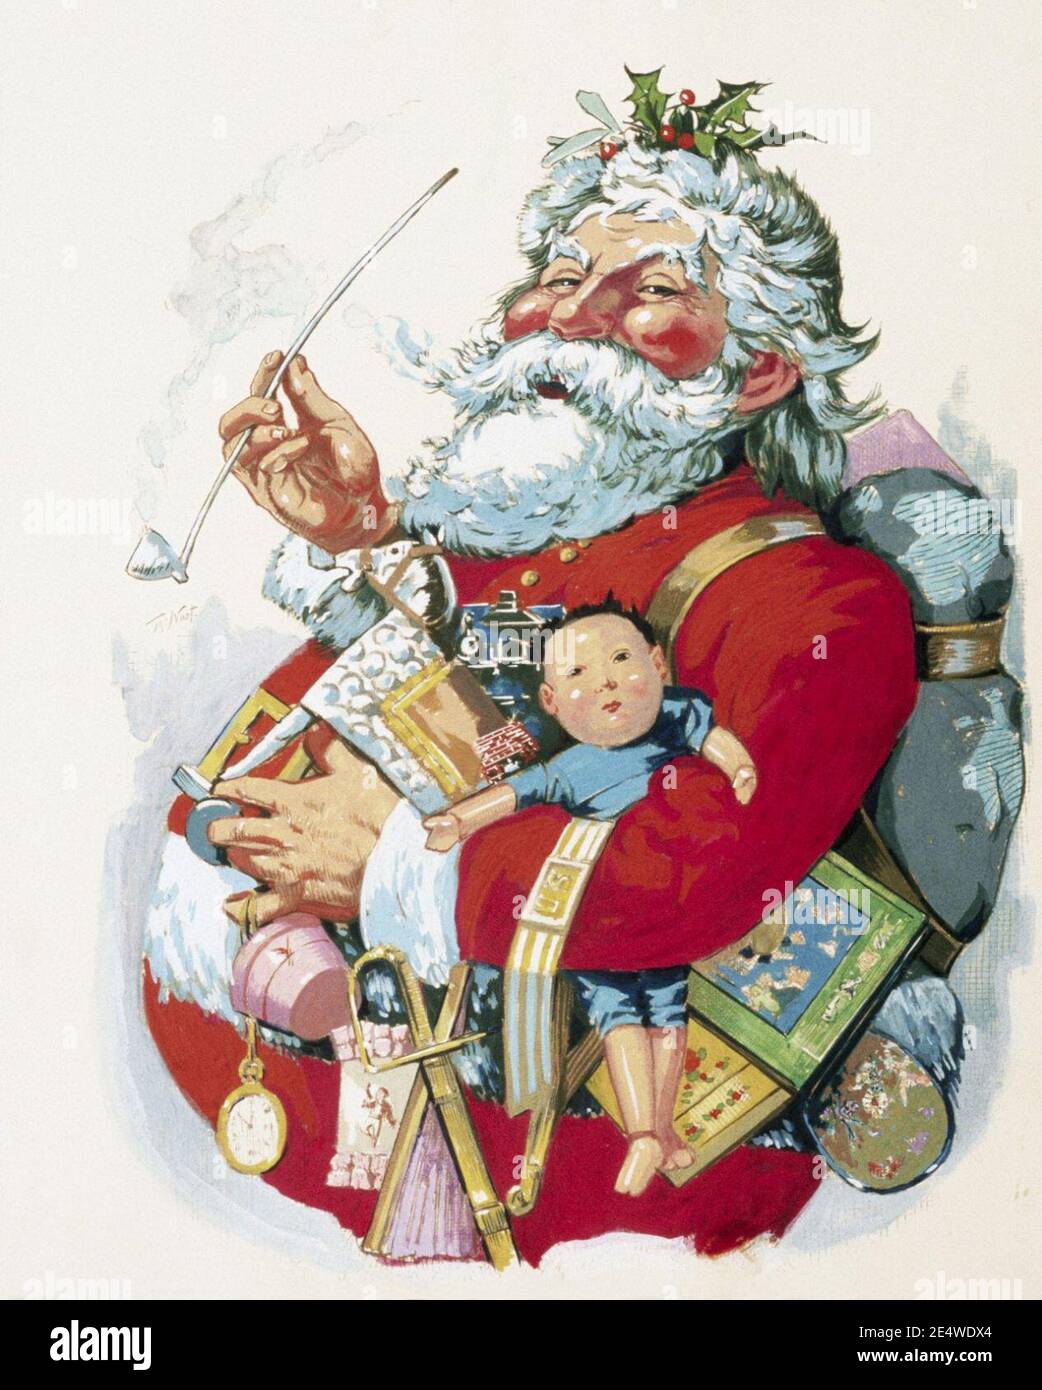 Merry Old Santa Claus by Thomas Nast. Stock Photo